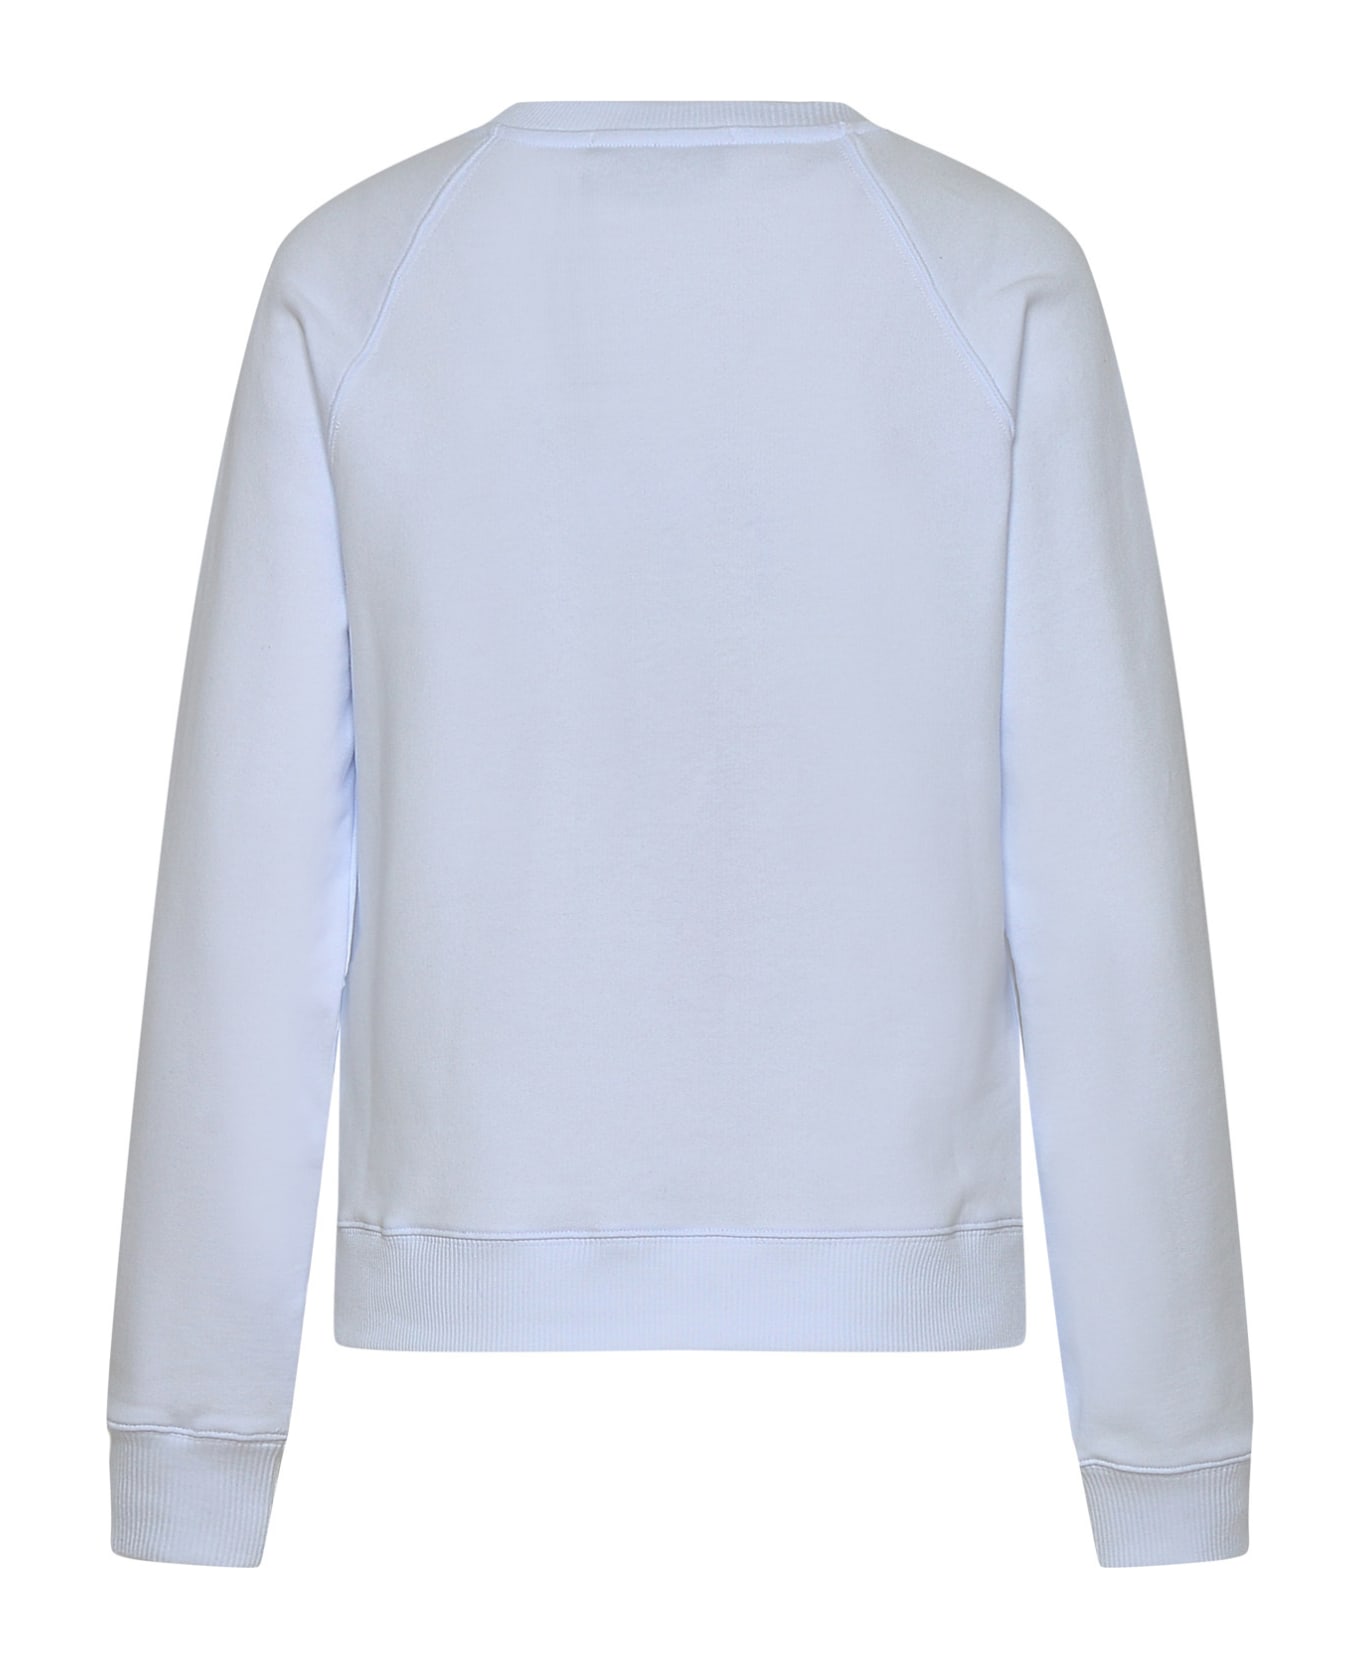 MSGM White Cotton Sweatshirt - Bianco フリース